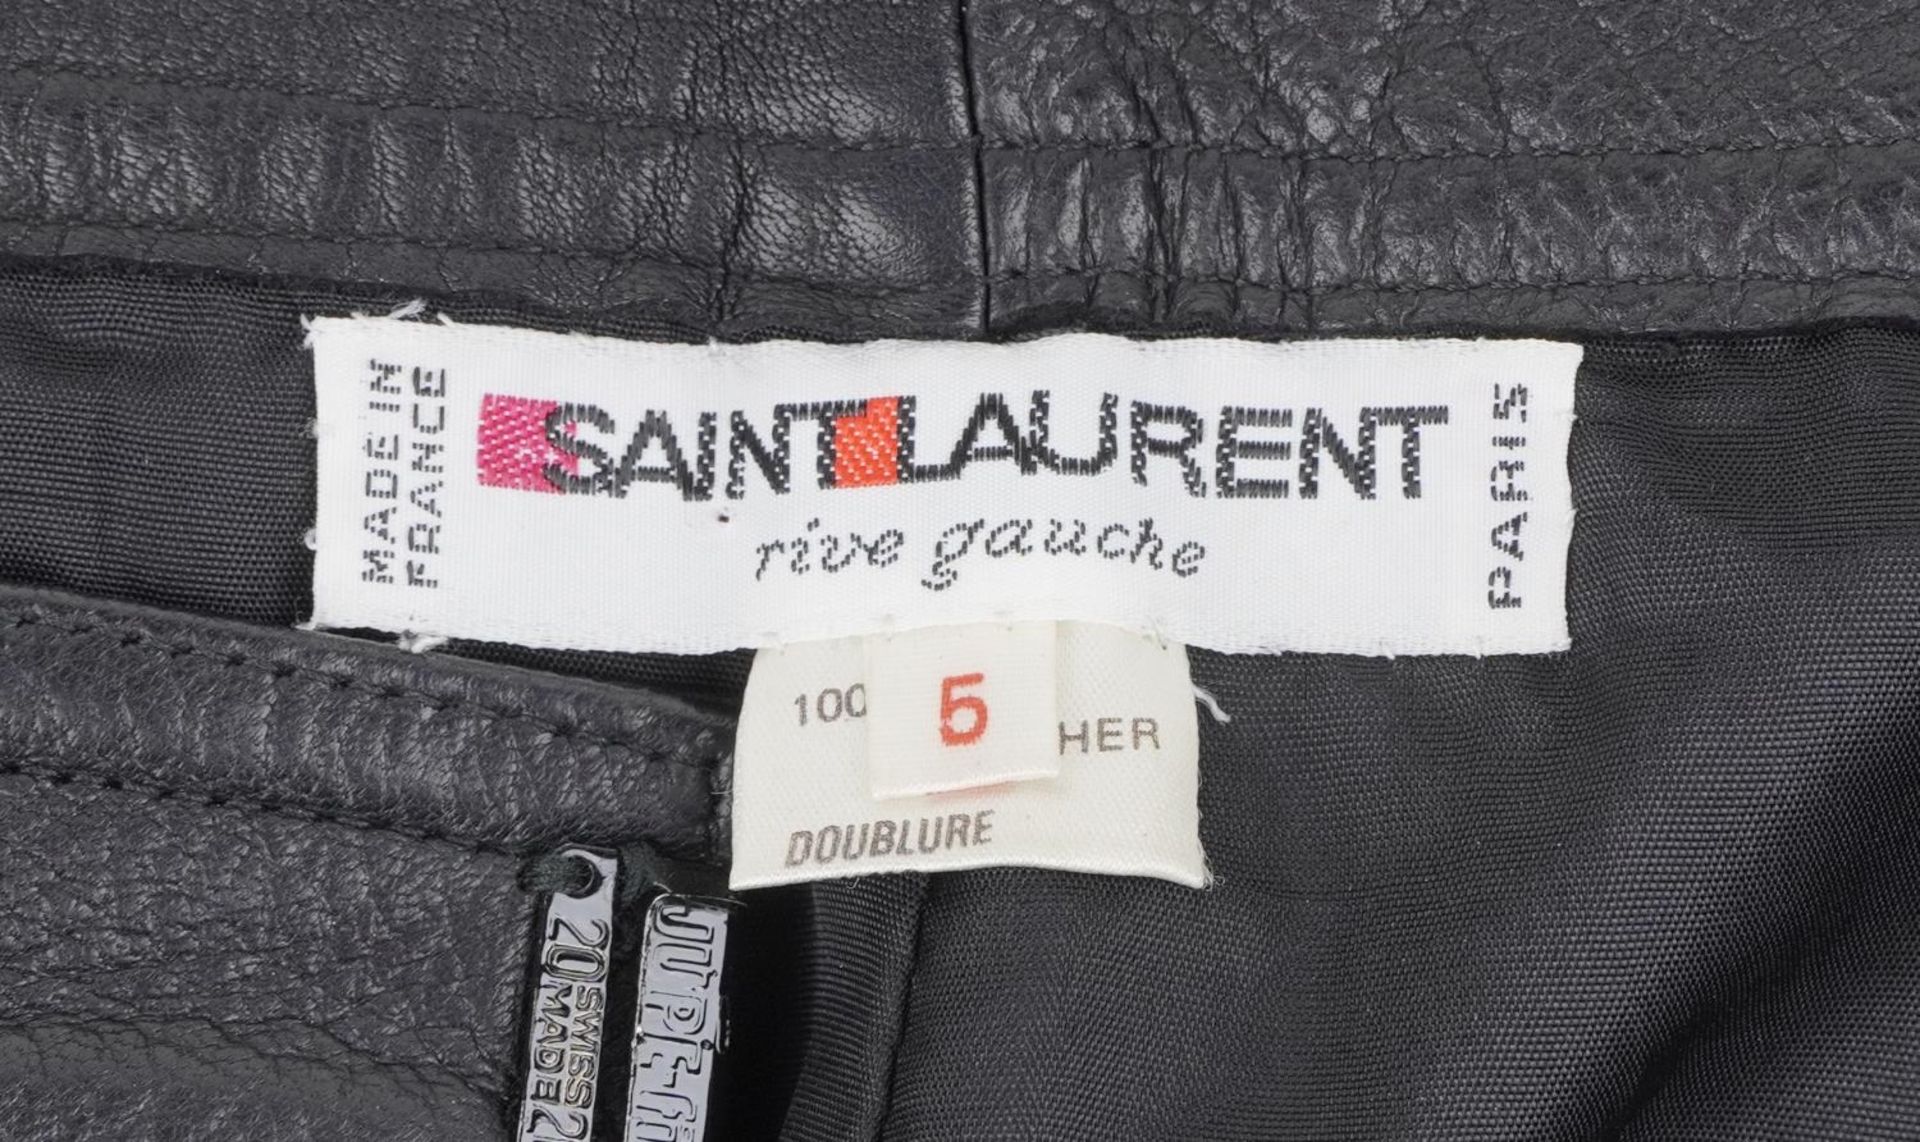 Yves Saint Laurent, Pair of vintage French Rive Gauche leather trousers, size 5 - Bild 4 aus 4